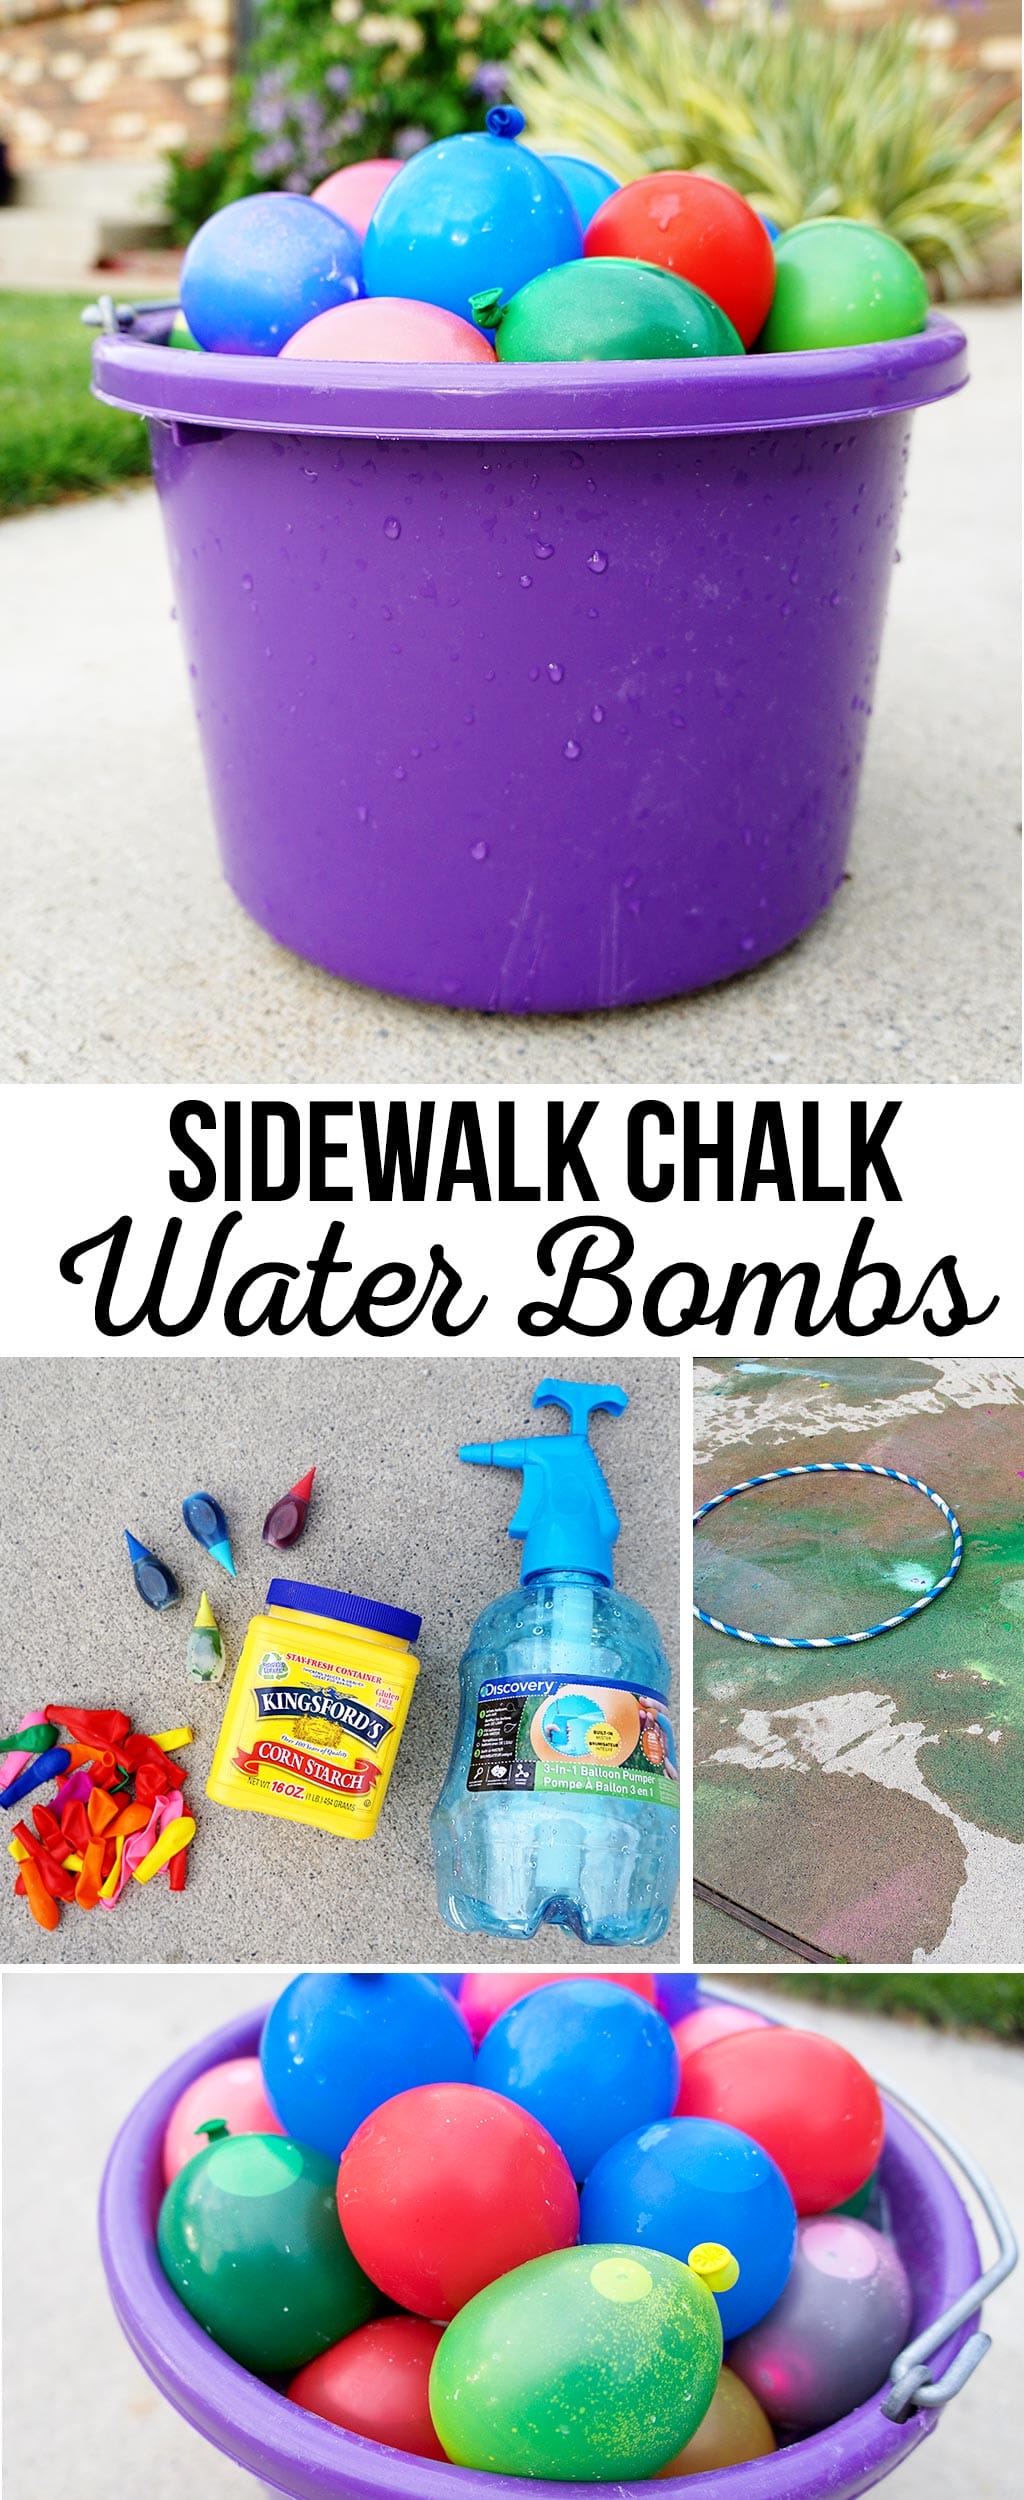 Sidewalk Chalk Water Bombs